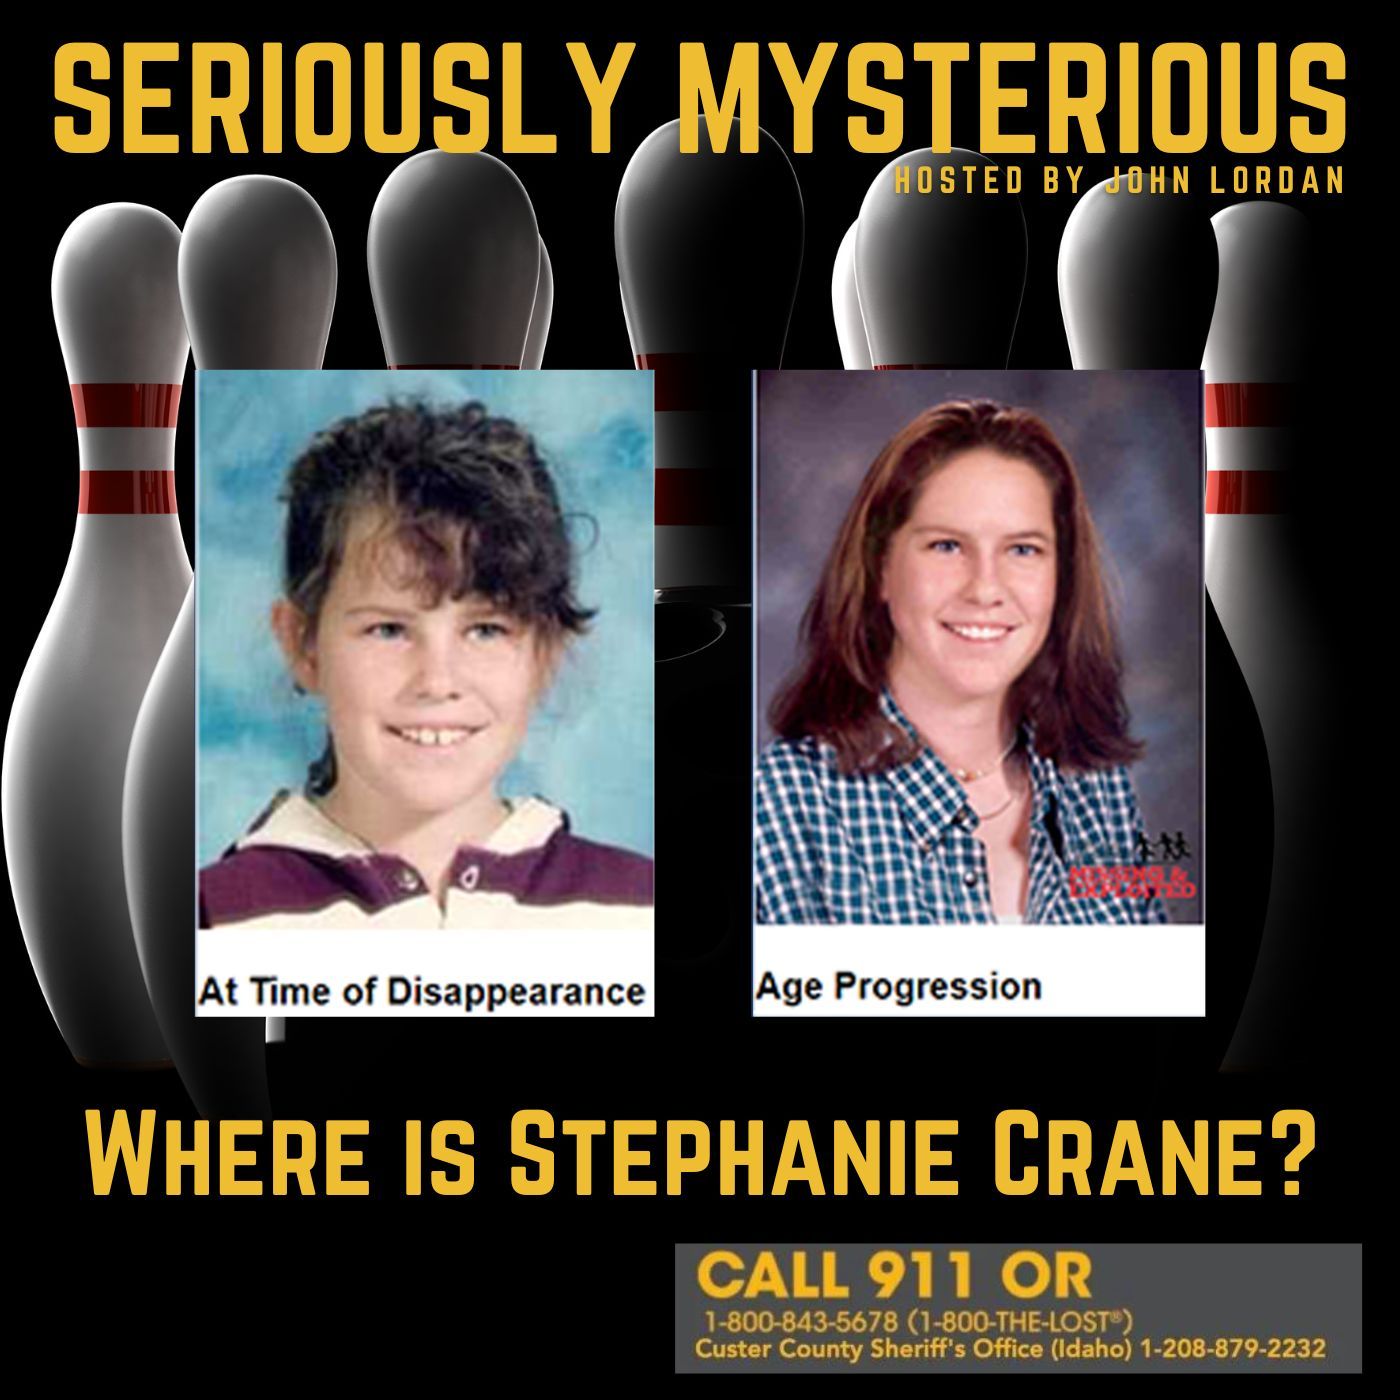 Where is Stephanie Crane?